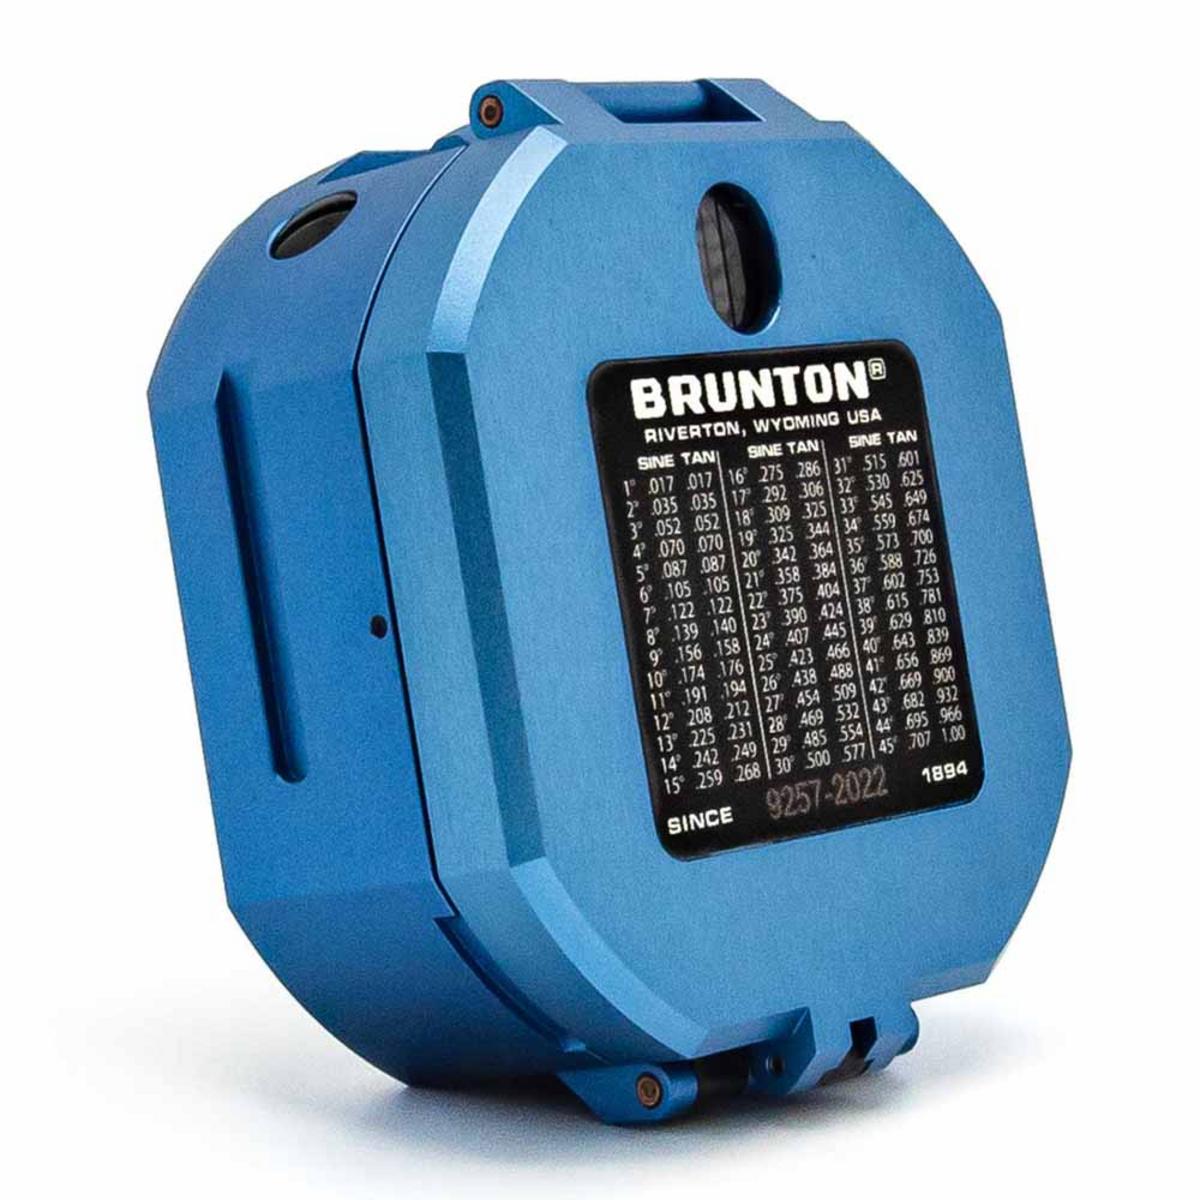 Brunton Standard Transit Compass, Azimuth (0-360) - Blue